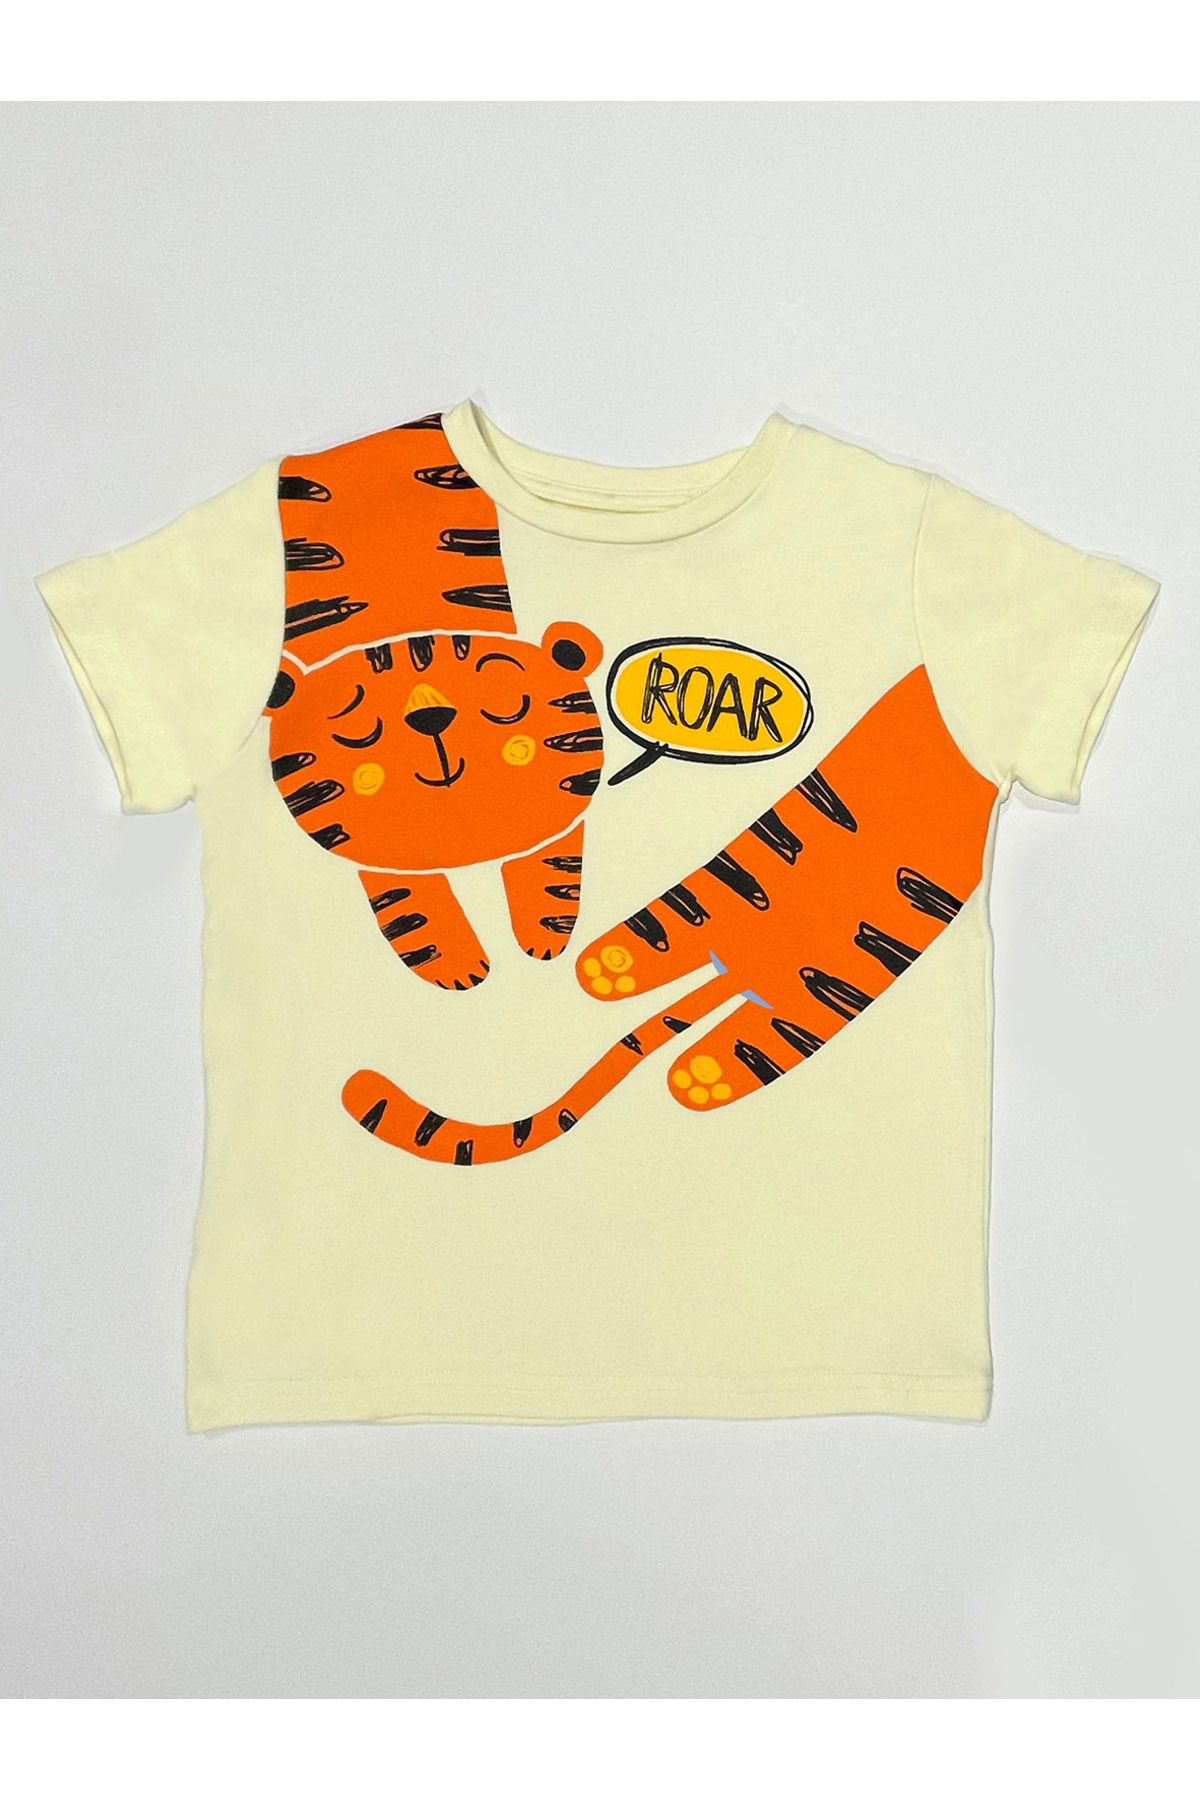 Denokids Roar Kaplan Erkek Çocuk T-shirt